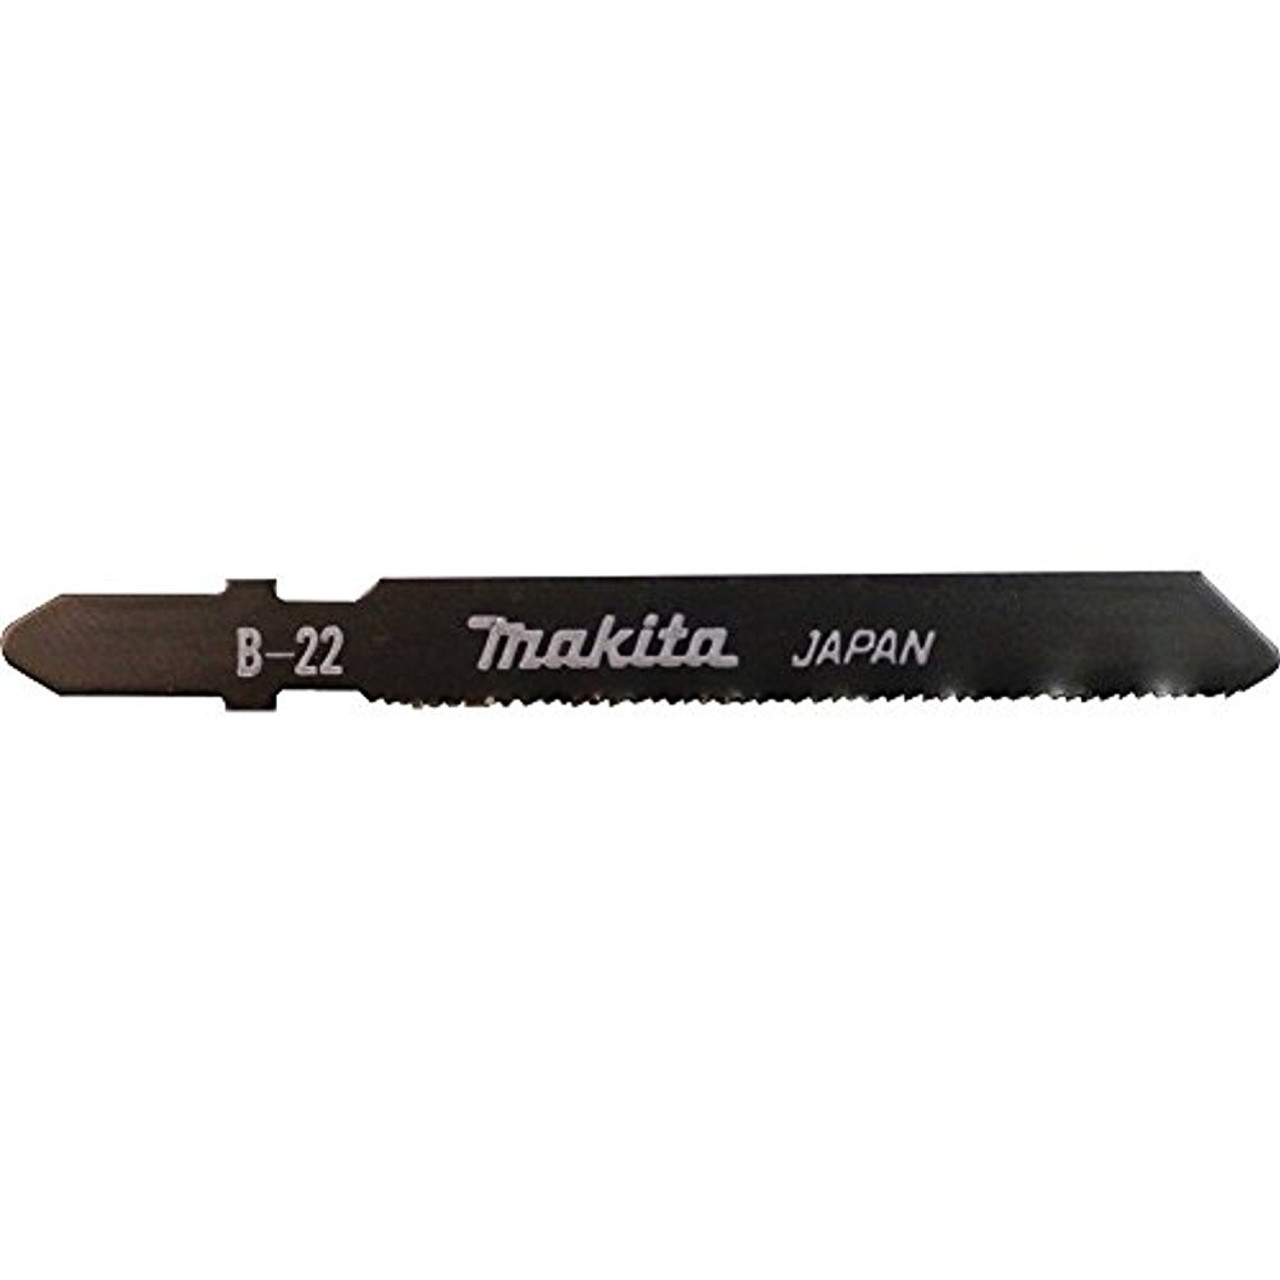 Makita 792473-8 Jig Saw Blade #B-22 5-Blades per Pack